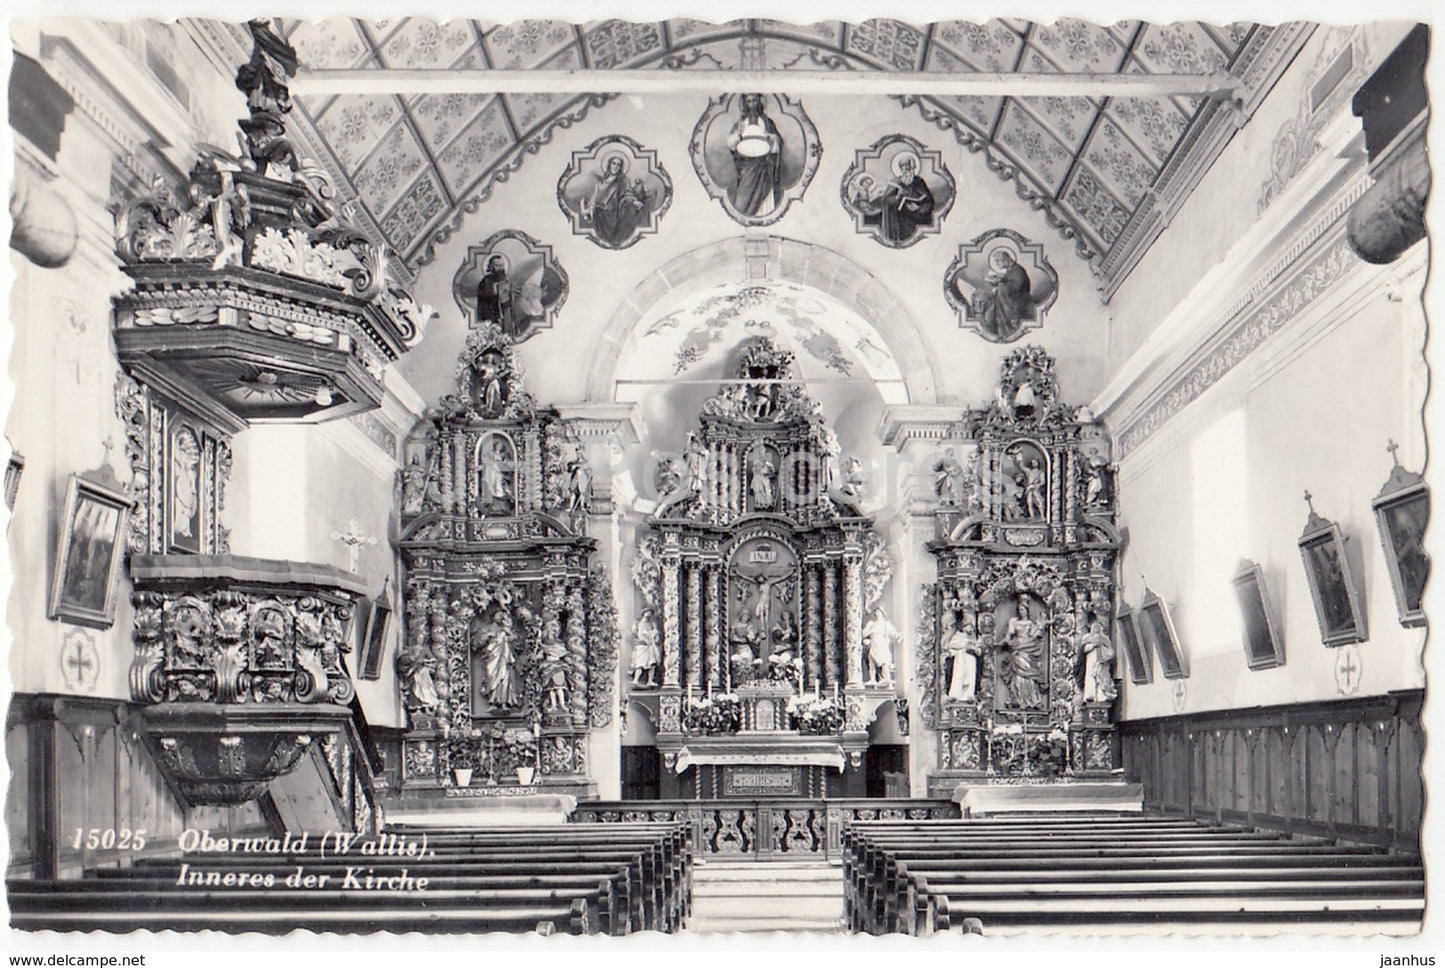 Oberwald - Wallis - Inneres der Kirche - church - hotel Furka - 15025 - Switzerland - old postcard - unused - JH Postcards